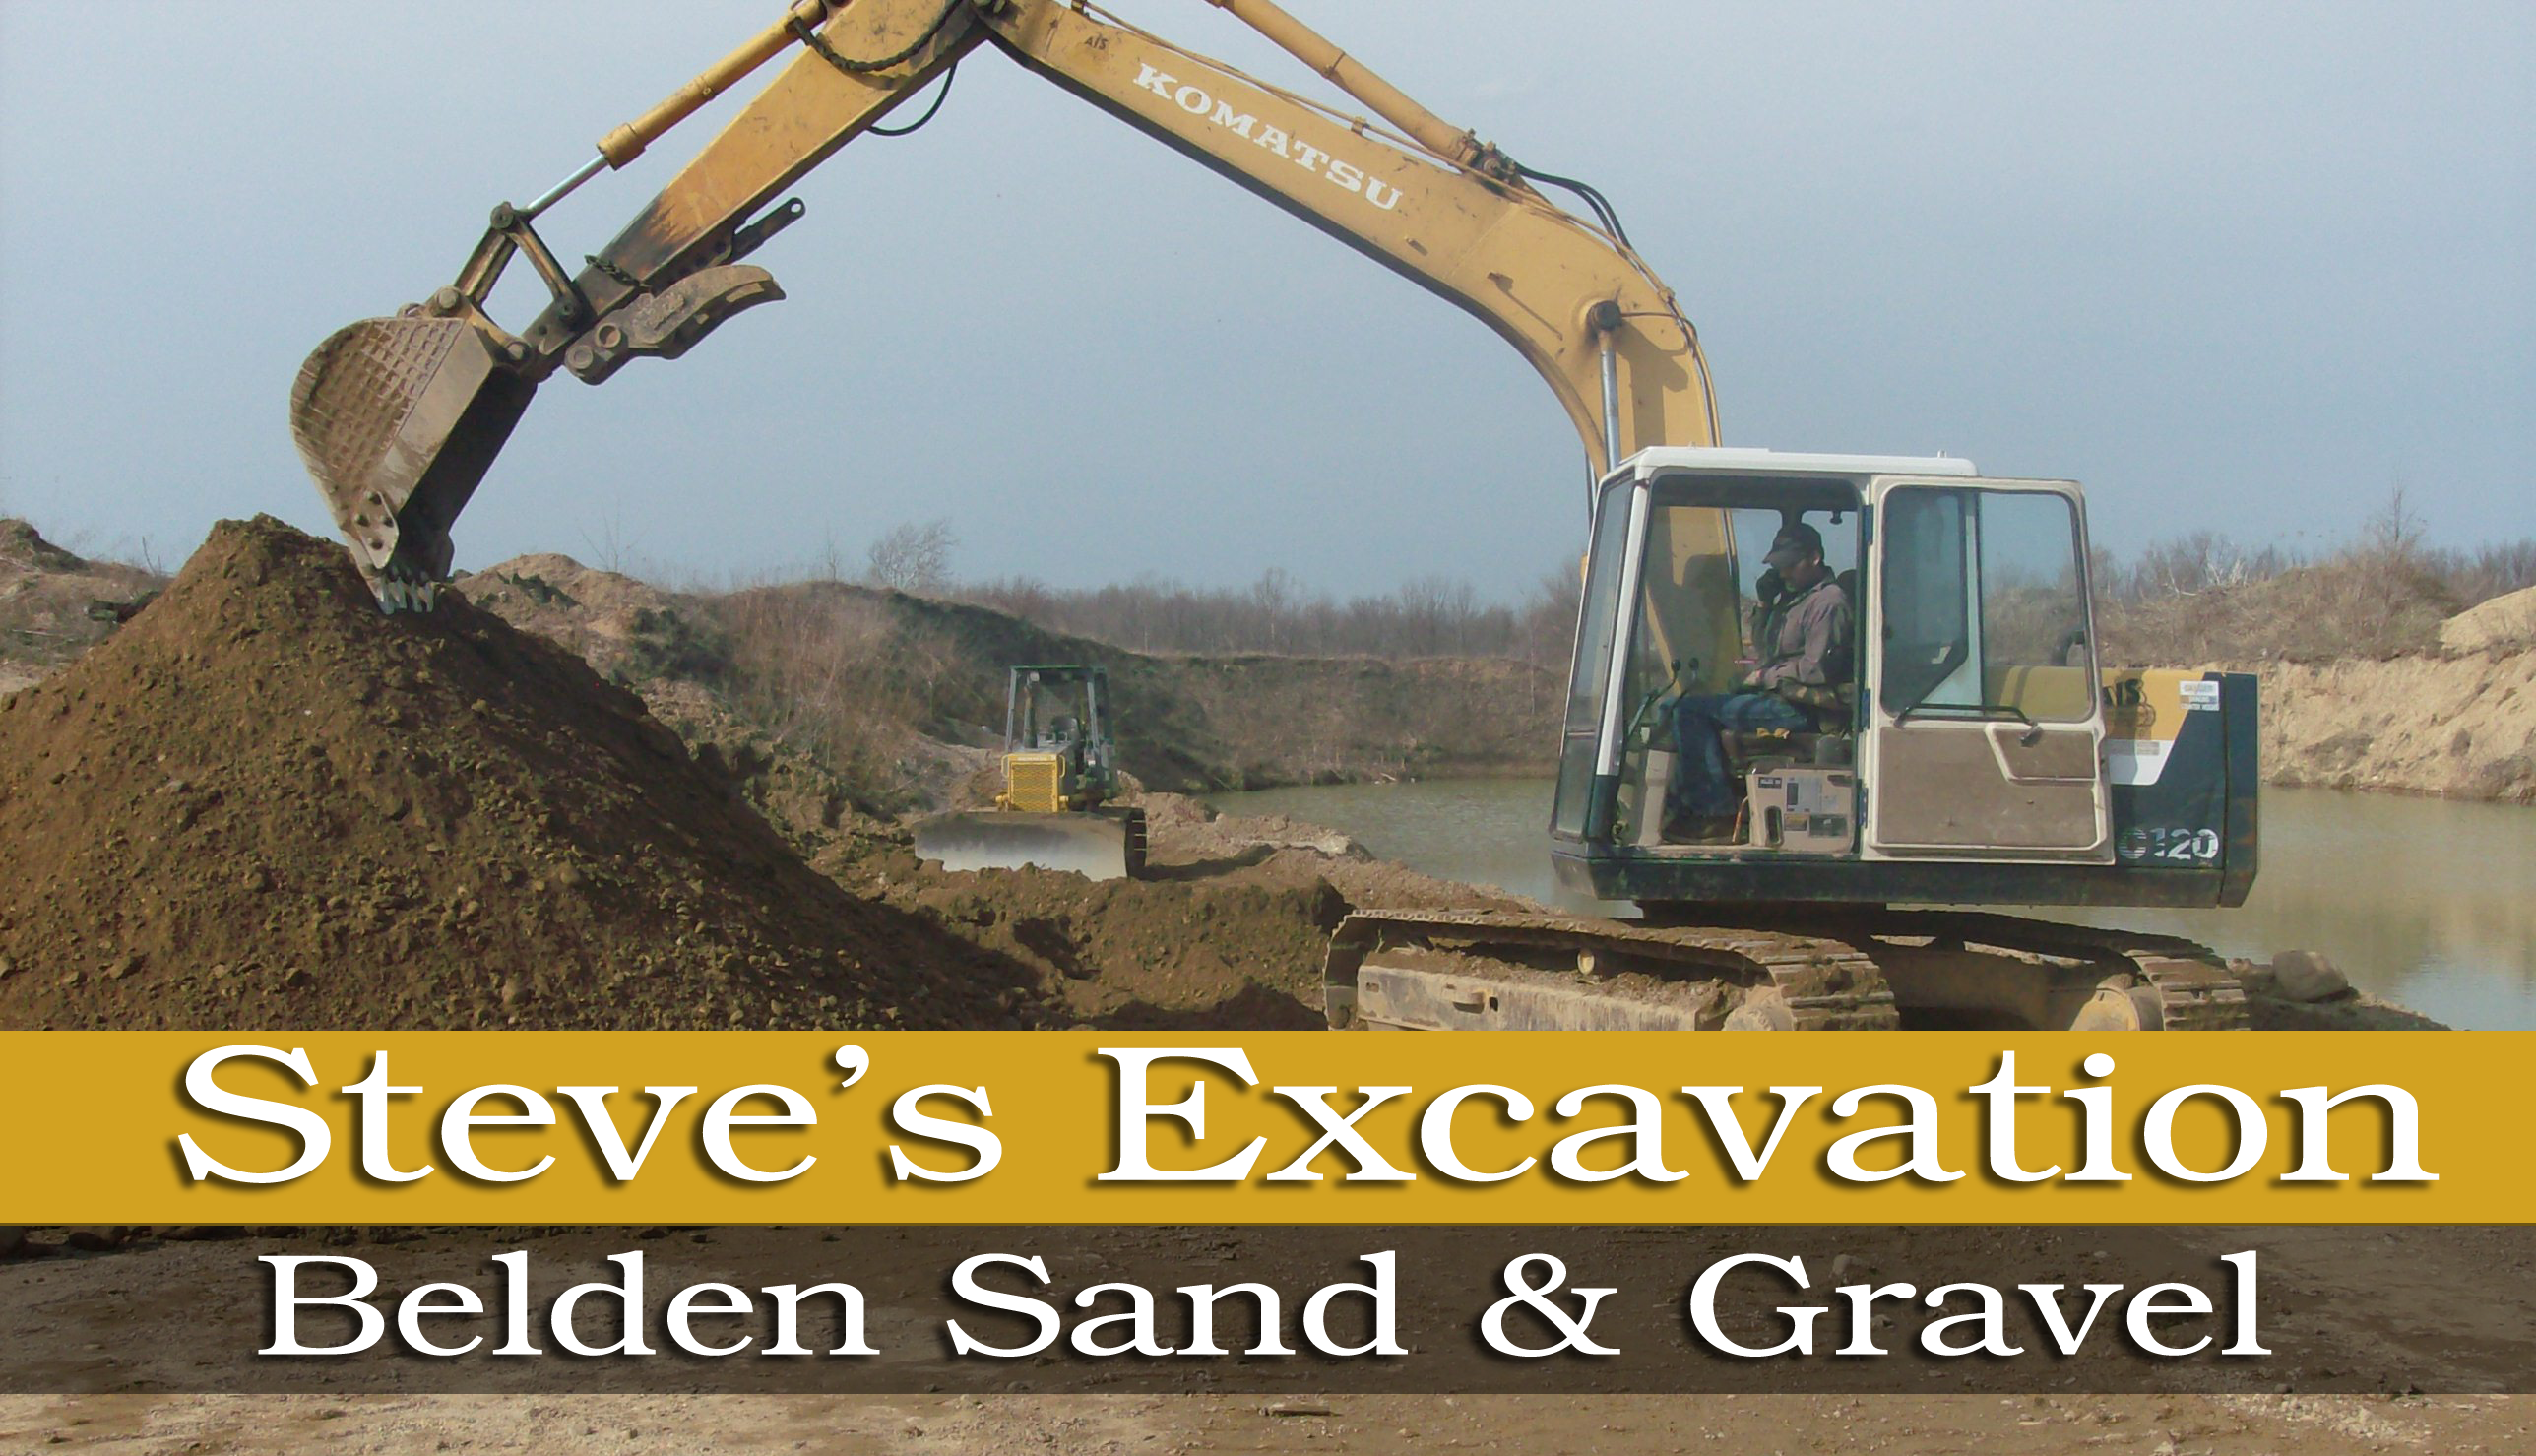 Steve's Excavation and Belden Sand & Gravel